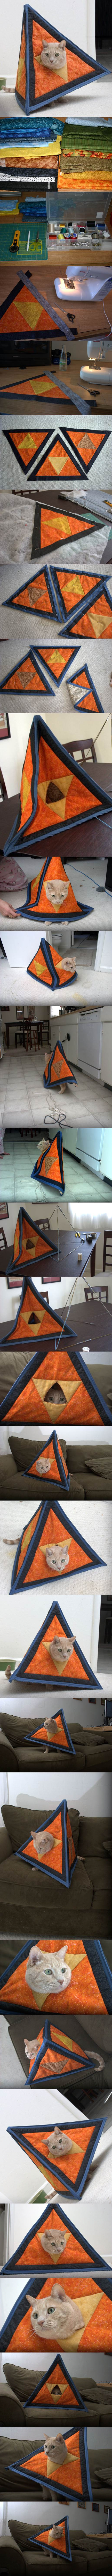 DIY Cat Tetrahedron Costume 2